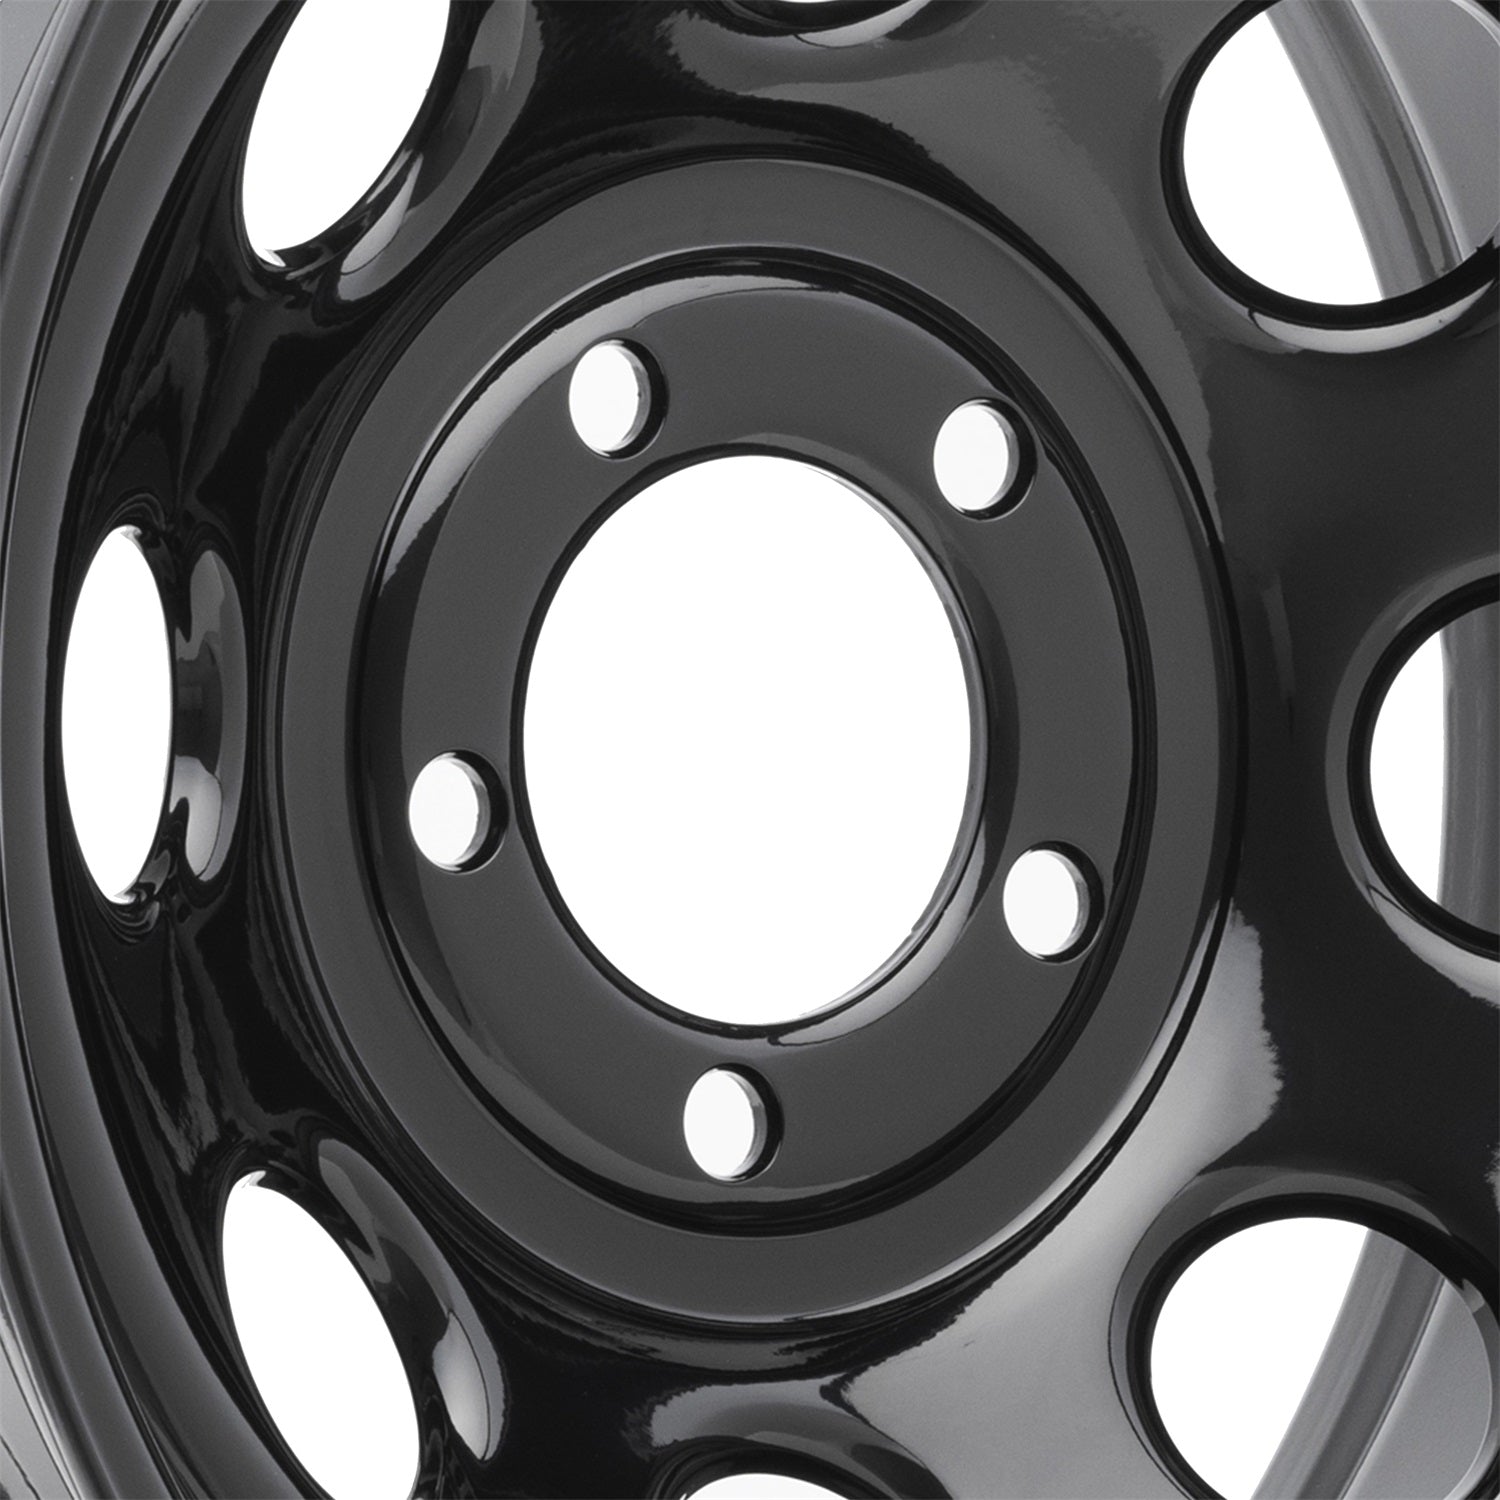 Pro Comp Wheels 97-5866 Rock Crawler Series 97 Black Monster Mod Wheel